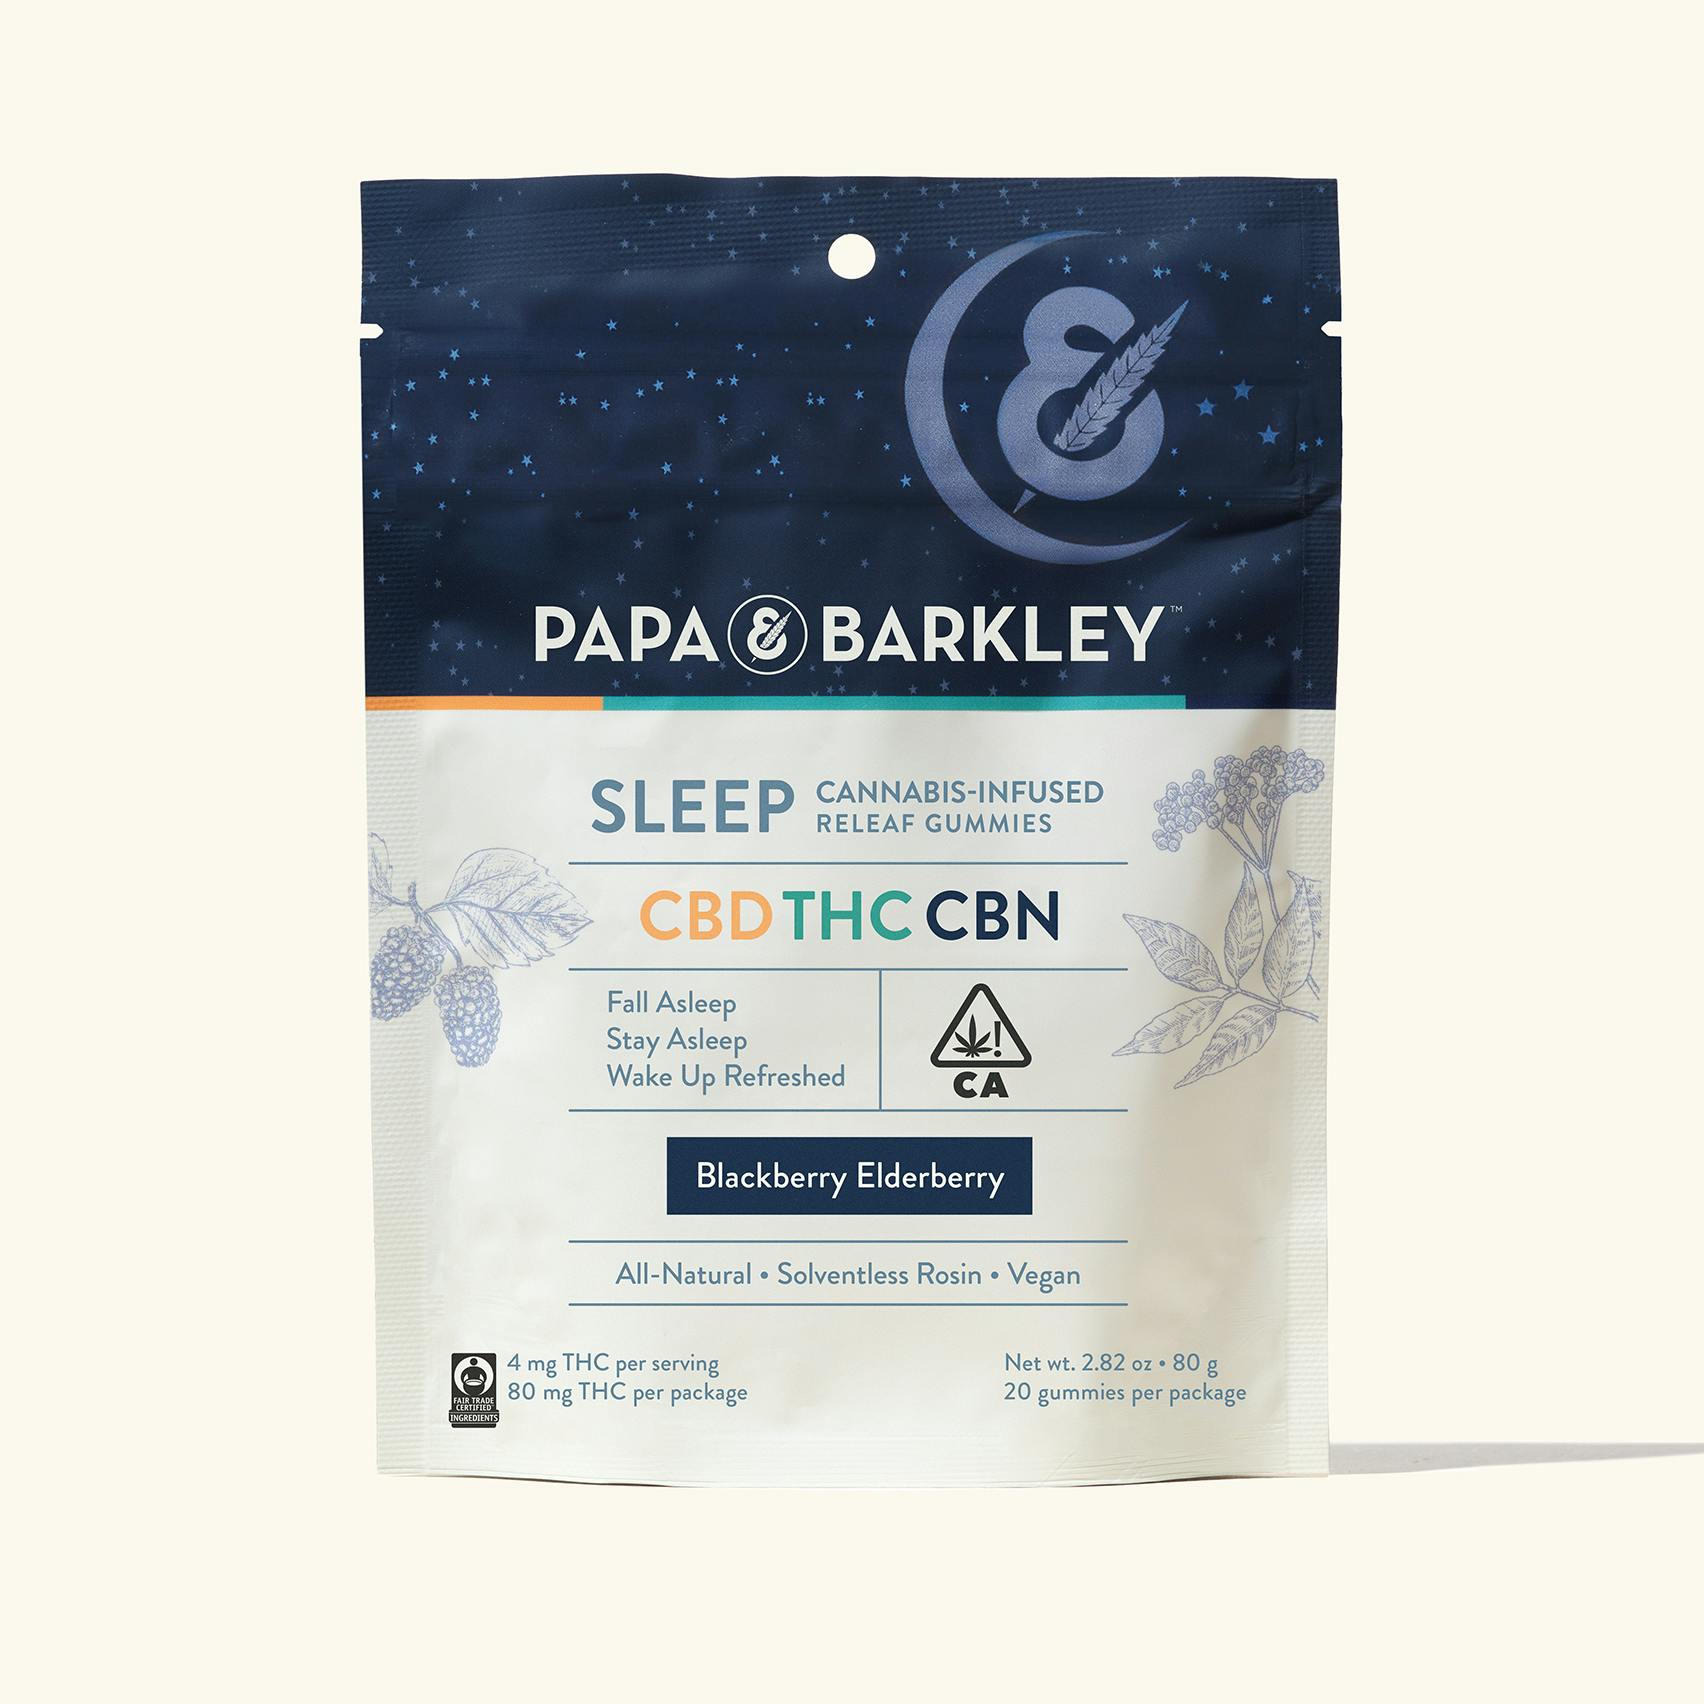 PB CA CBN Sleep Gummies Pouch Product Image PDP Main Gallery Cream 01